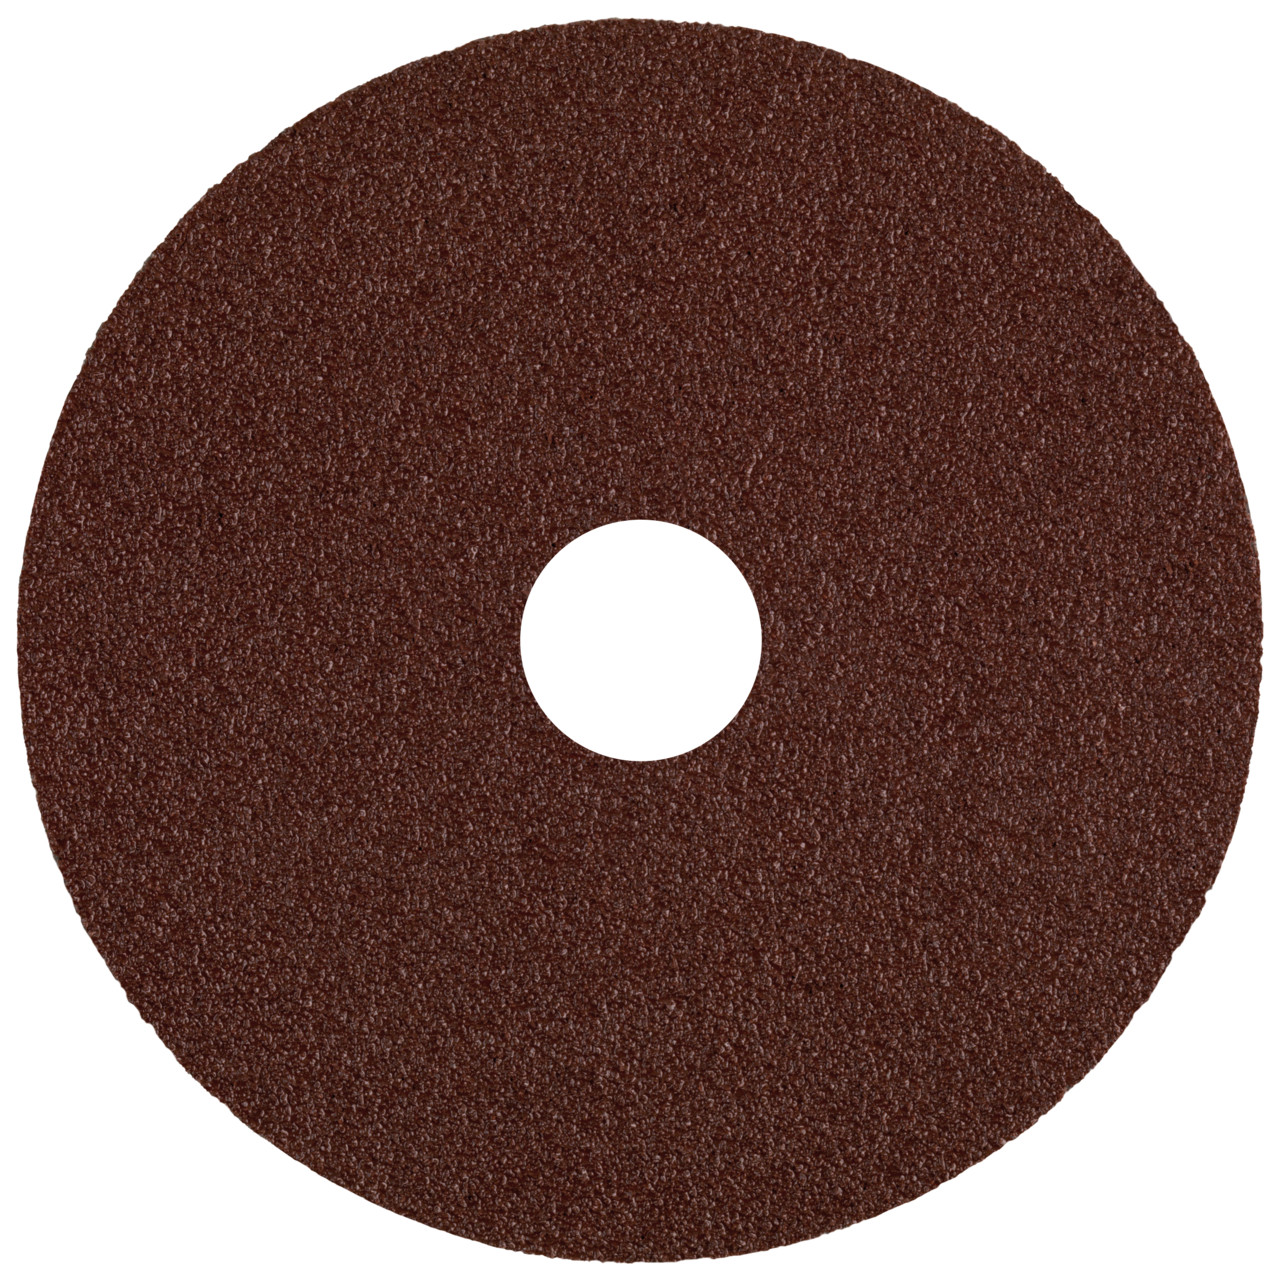 Tyrolit A-B02 V Vulcanised fibre disc DxH 115x22 For steel, non-ferrous metals and wood, P80, shape: DISC, Art. 34286495